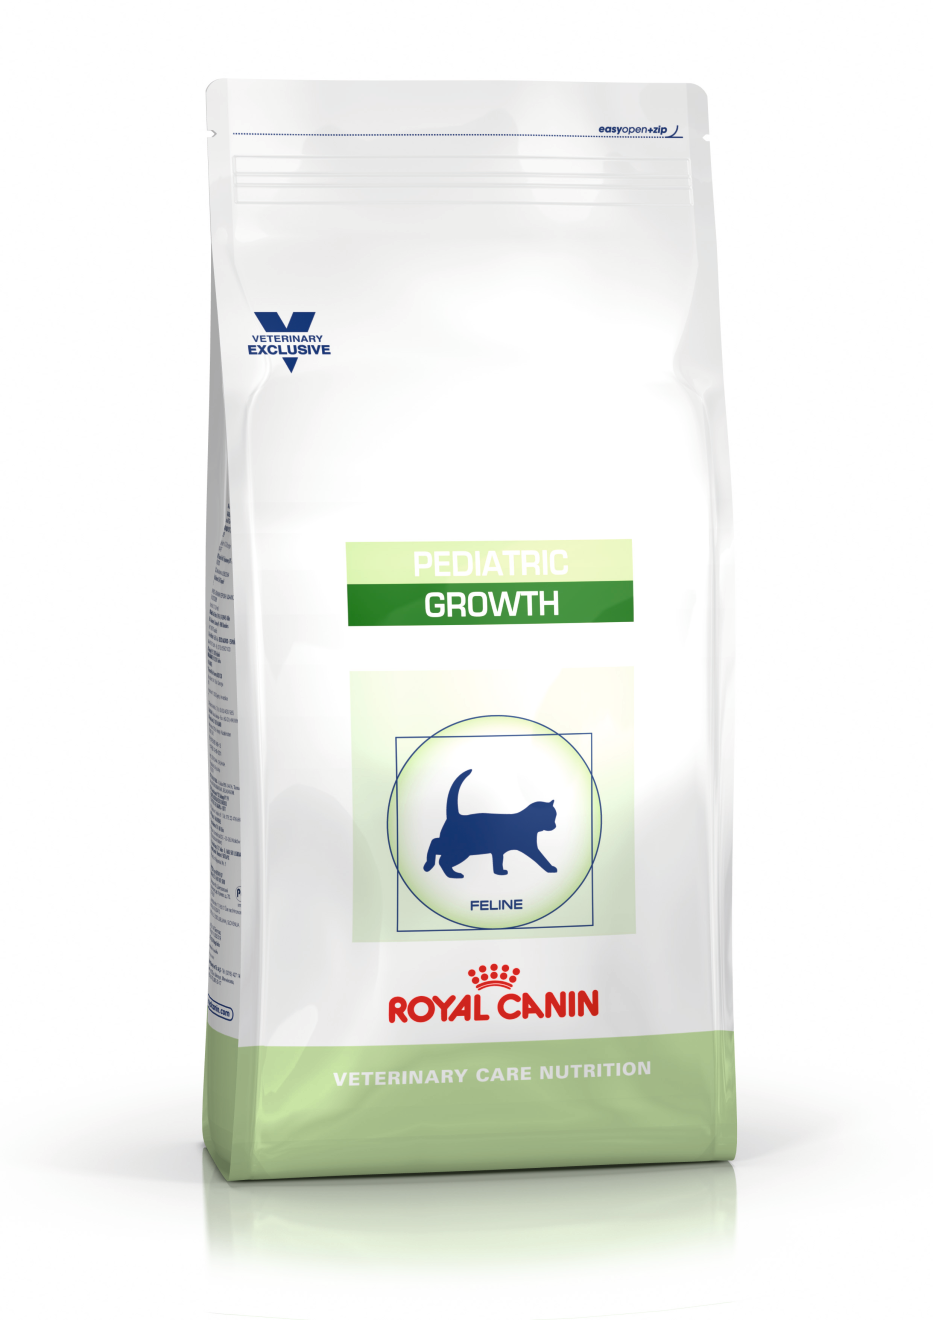 pediatric growth feline royal canin